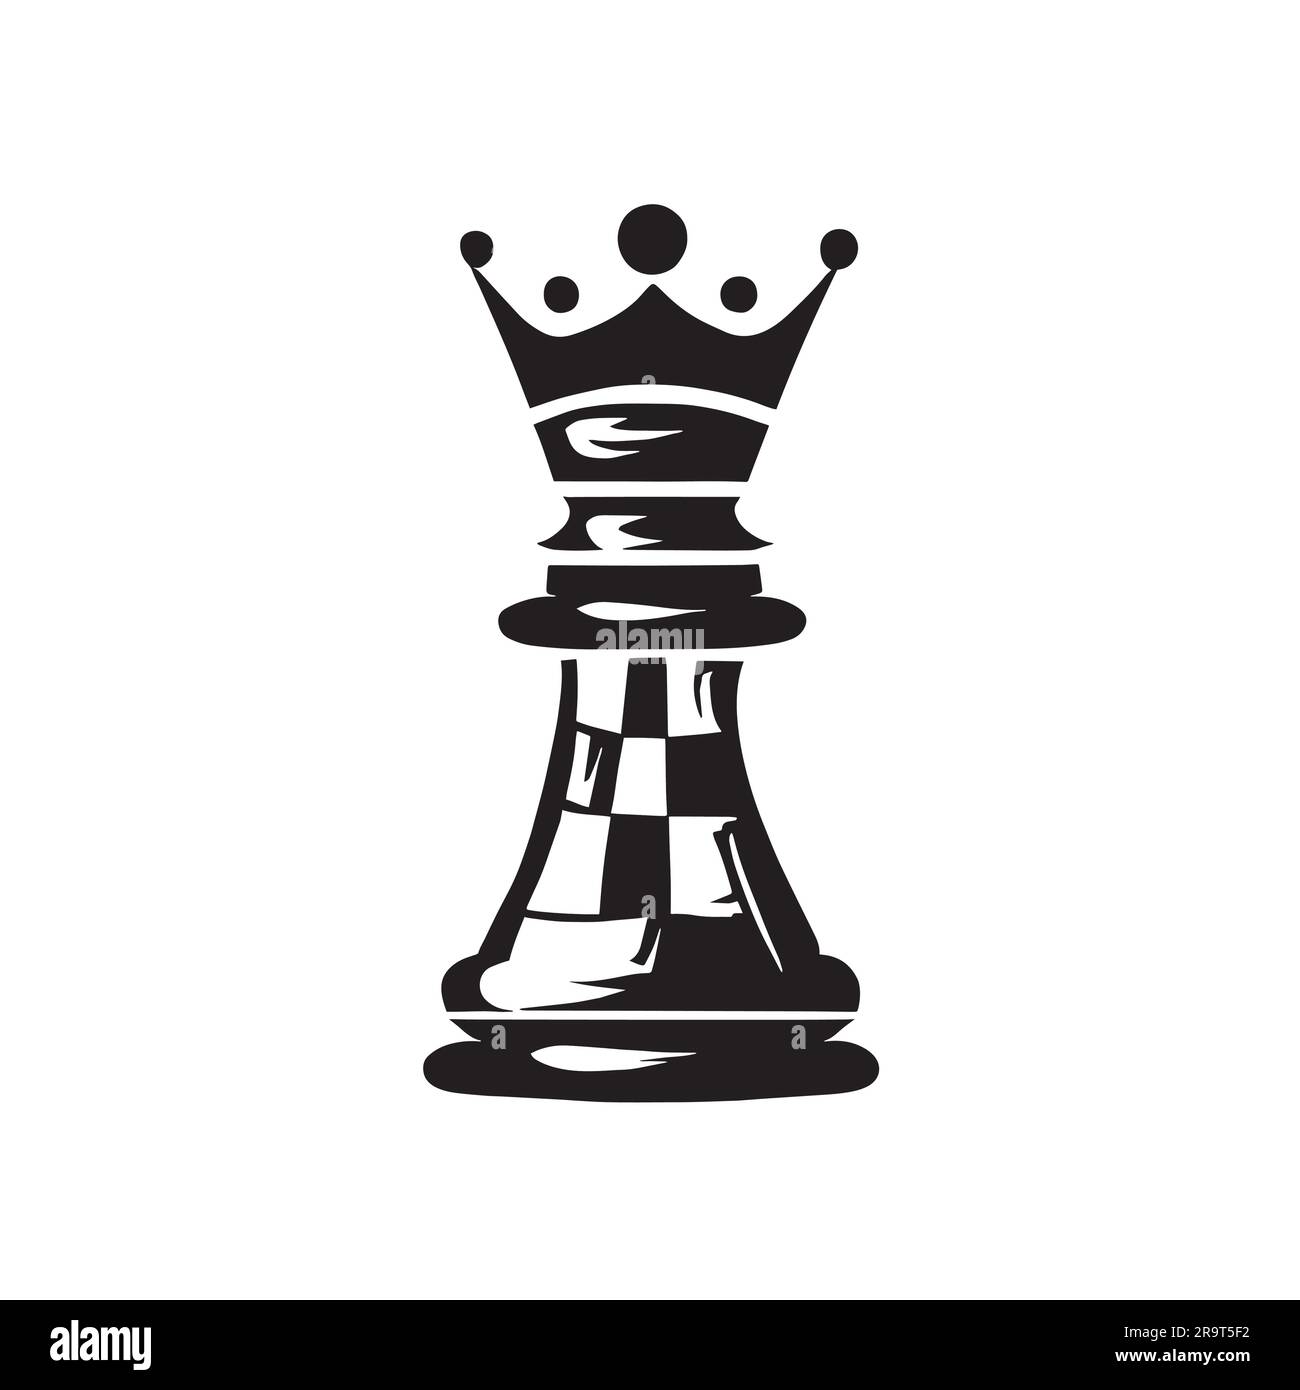 Worlds great chess games karpov - topalov Vector Image